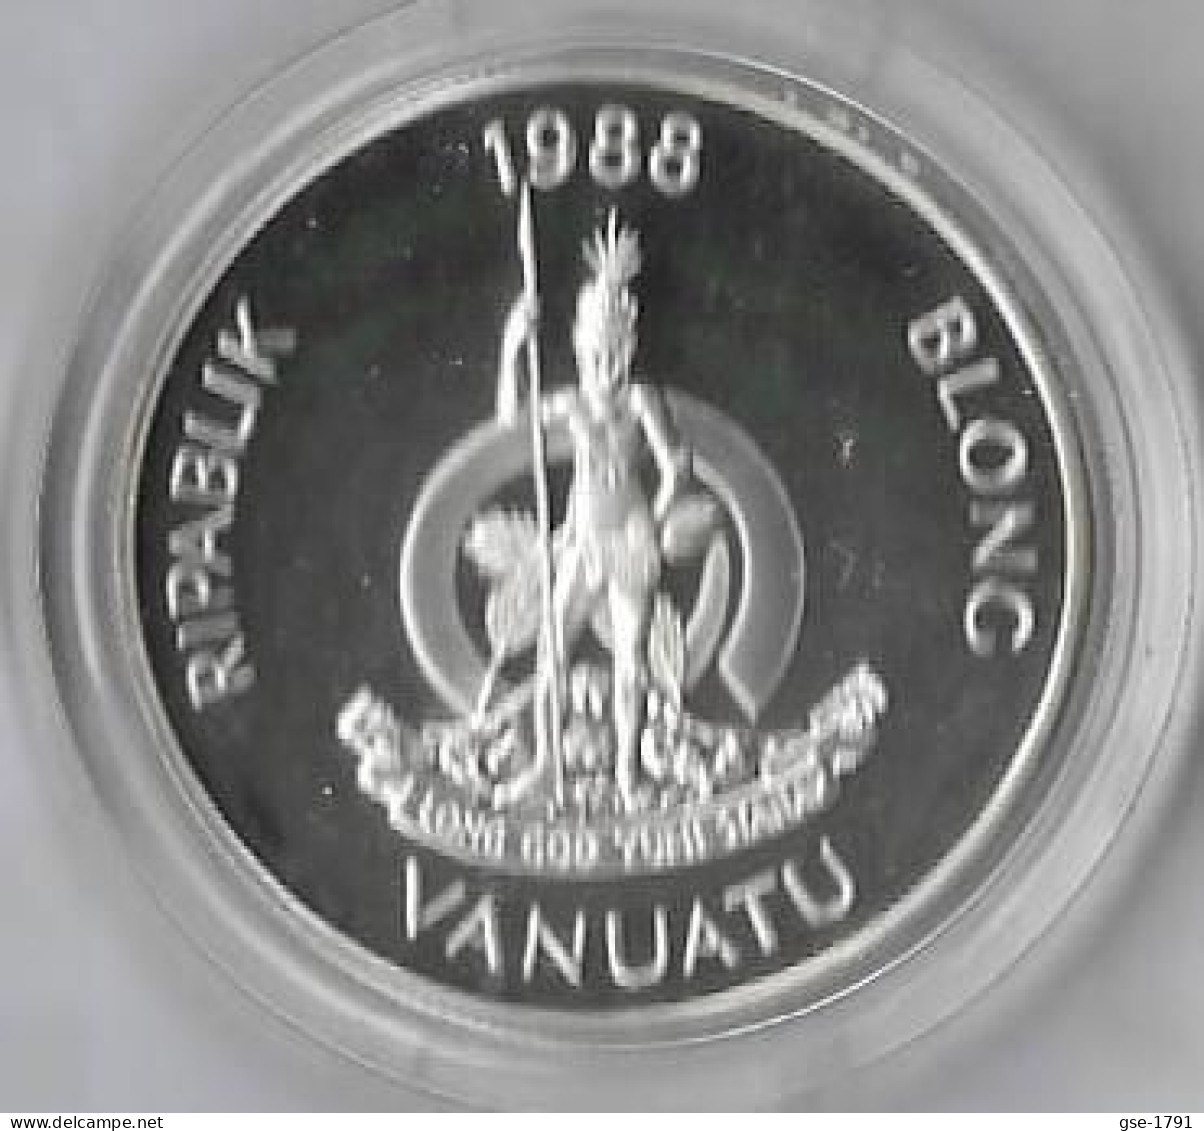 VANUATU   50 VATU Jeux SEOUL Année 1988  La Boxe  UNC - Vanuatu